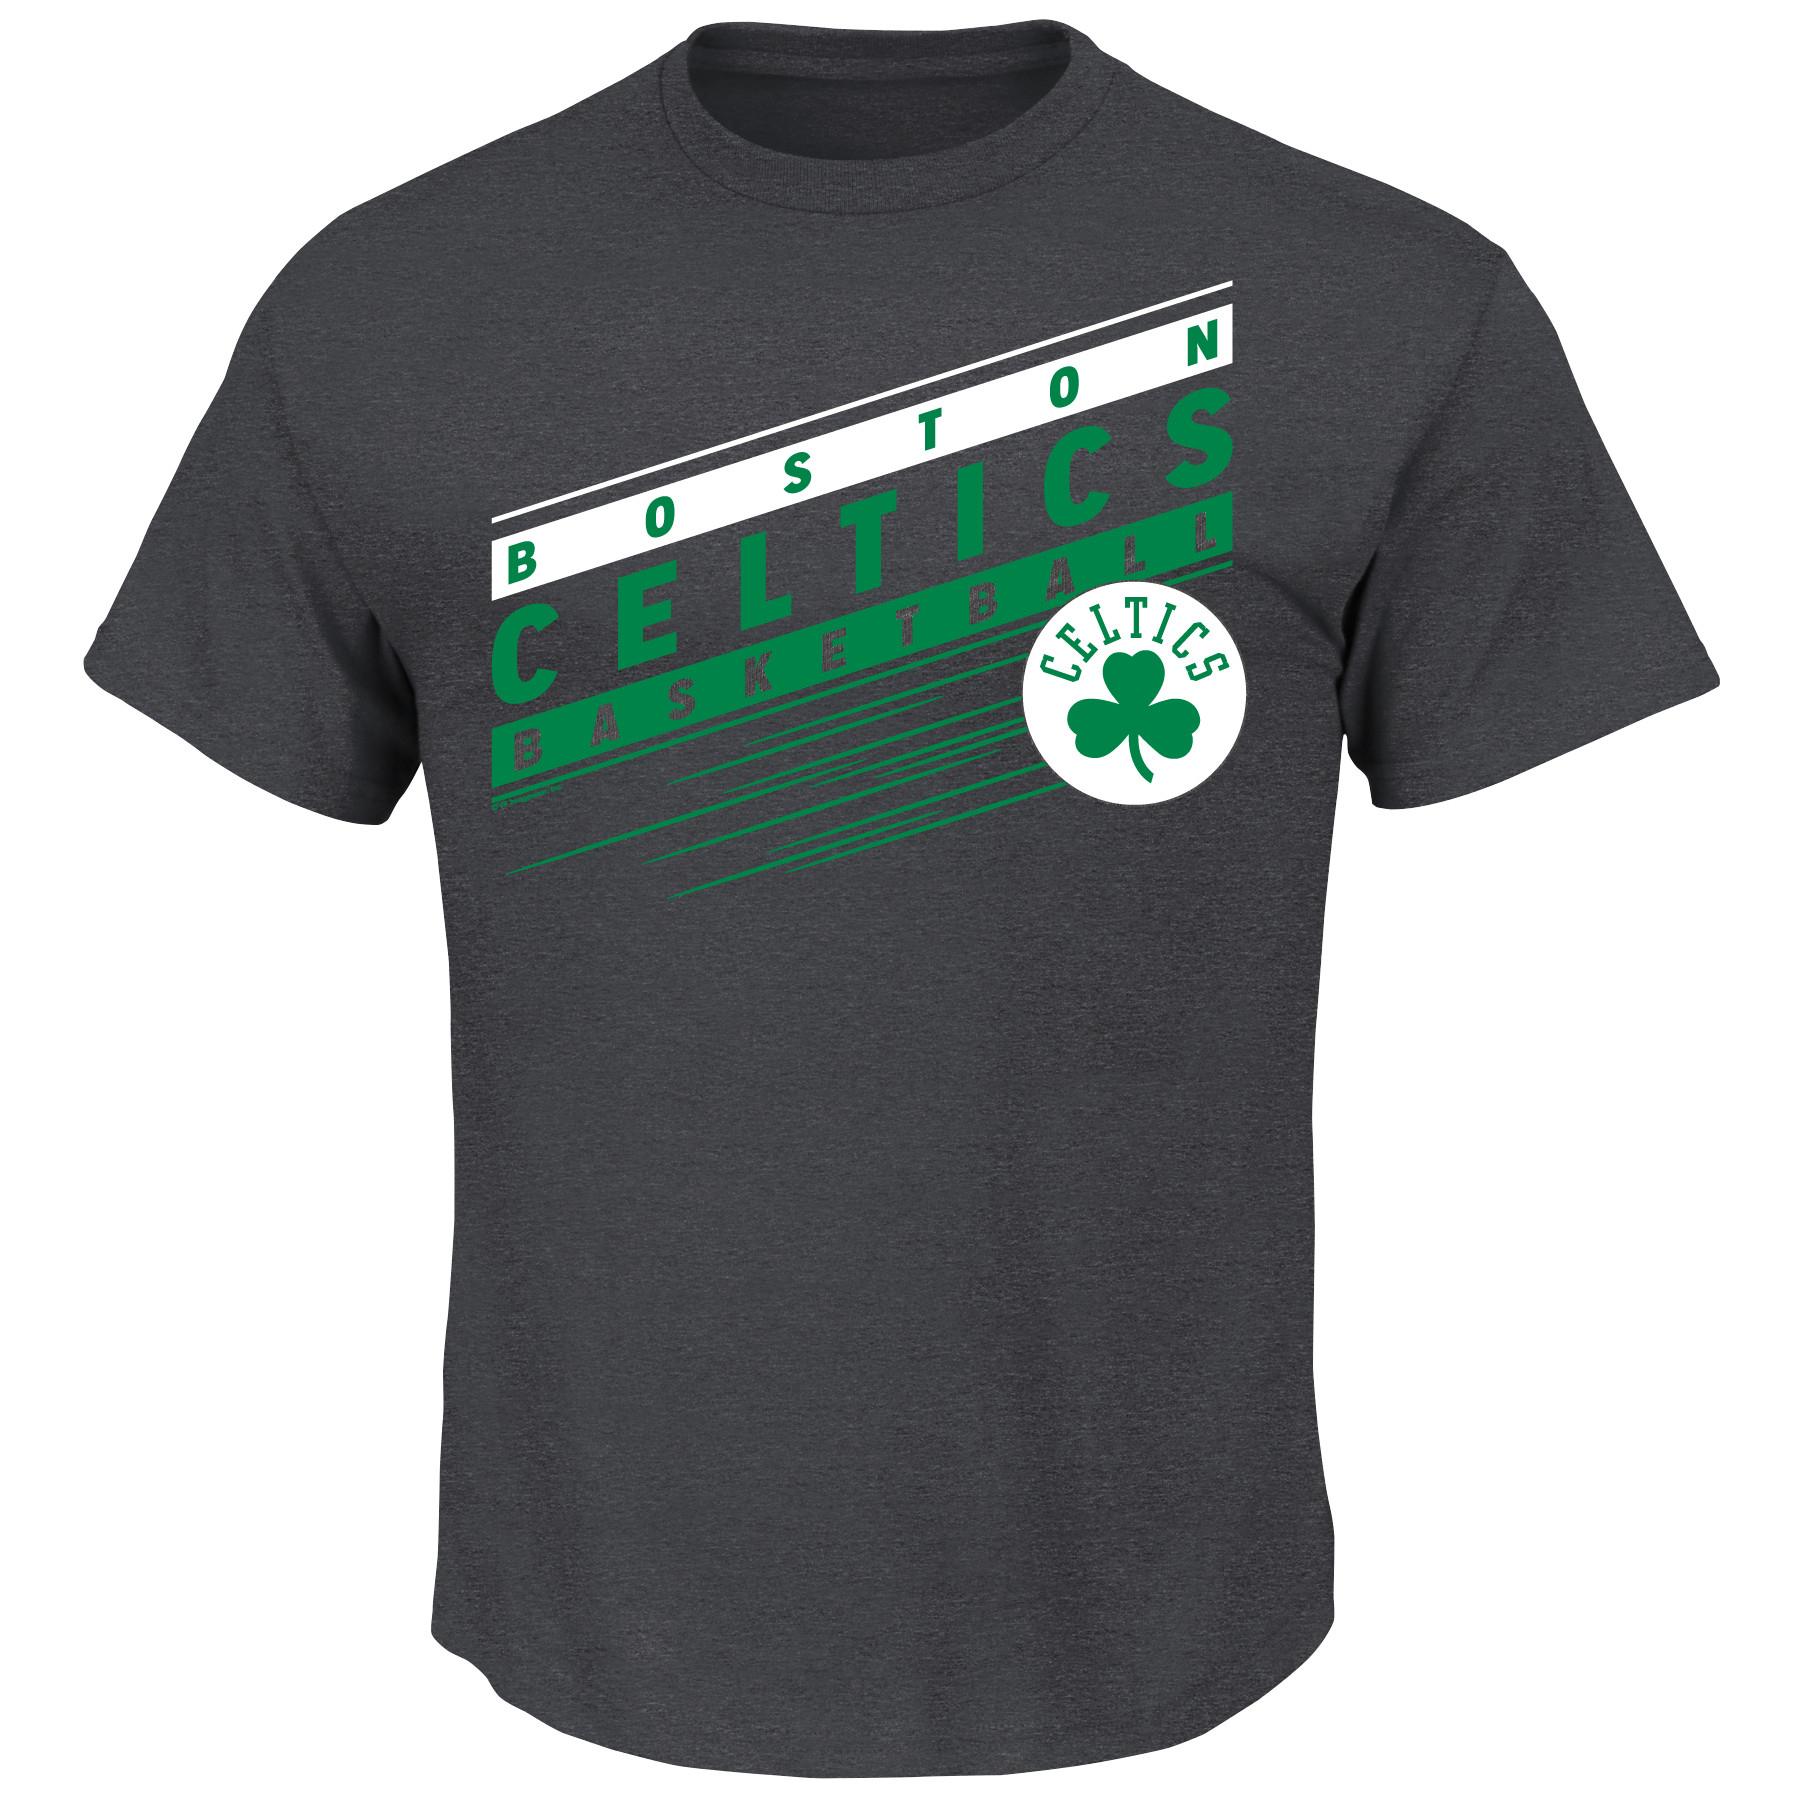 NBA(CANONICAL) Men's Big & Tall Graphic T-Shirt - Boston Celtics